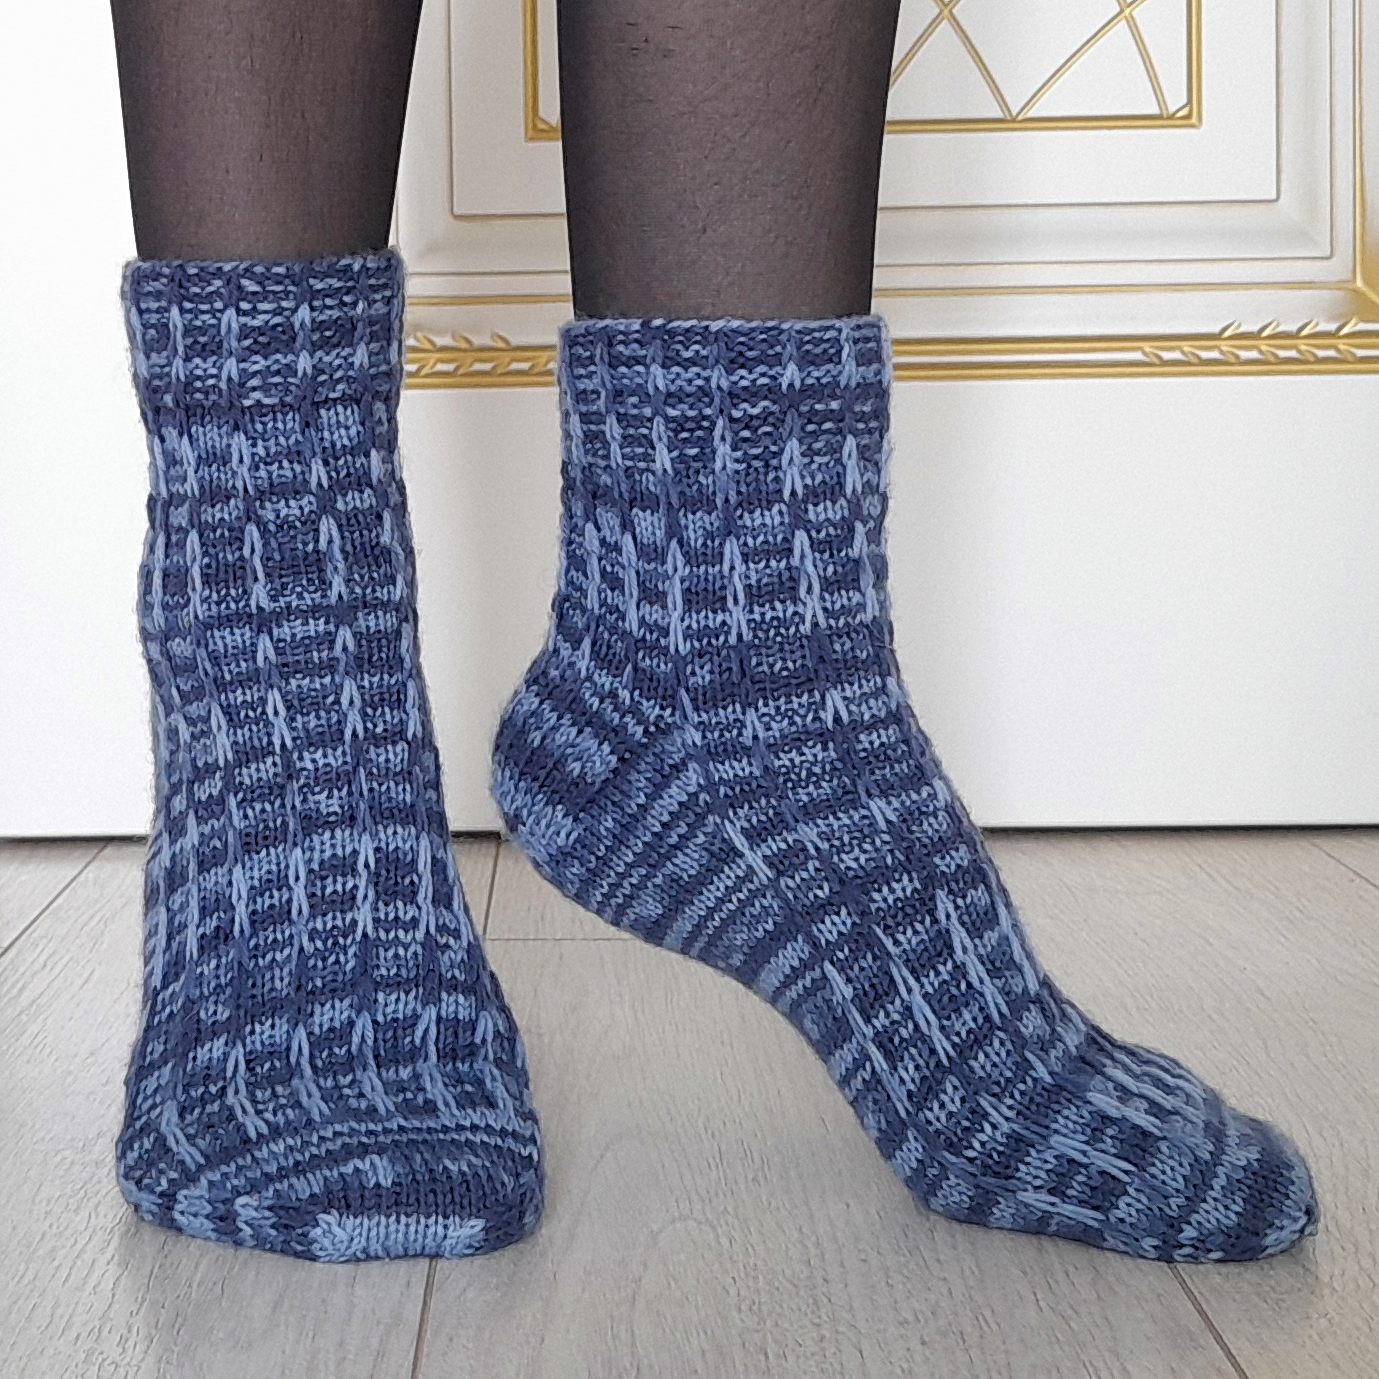 Knit women socks exclusive gifts for women